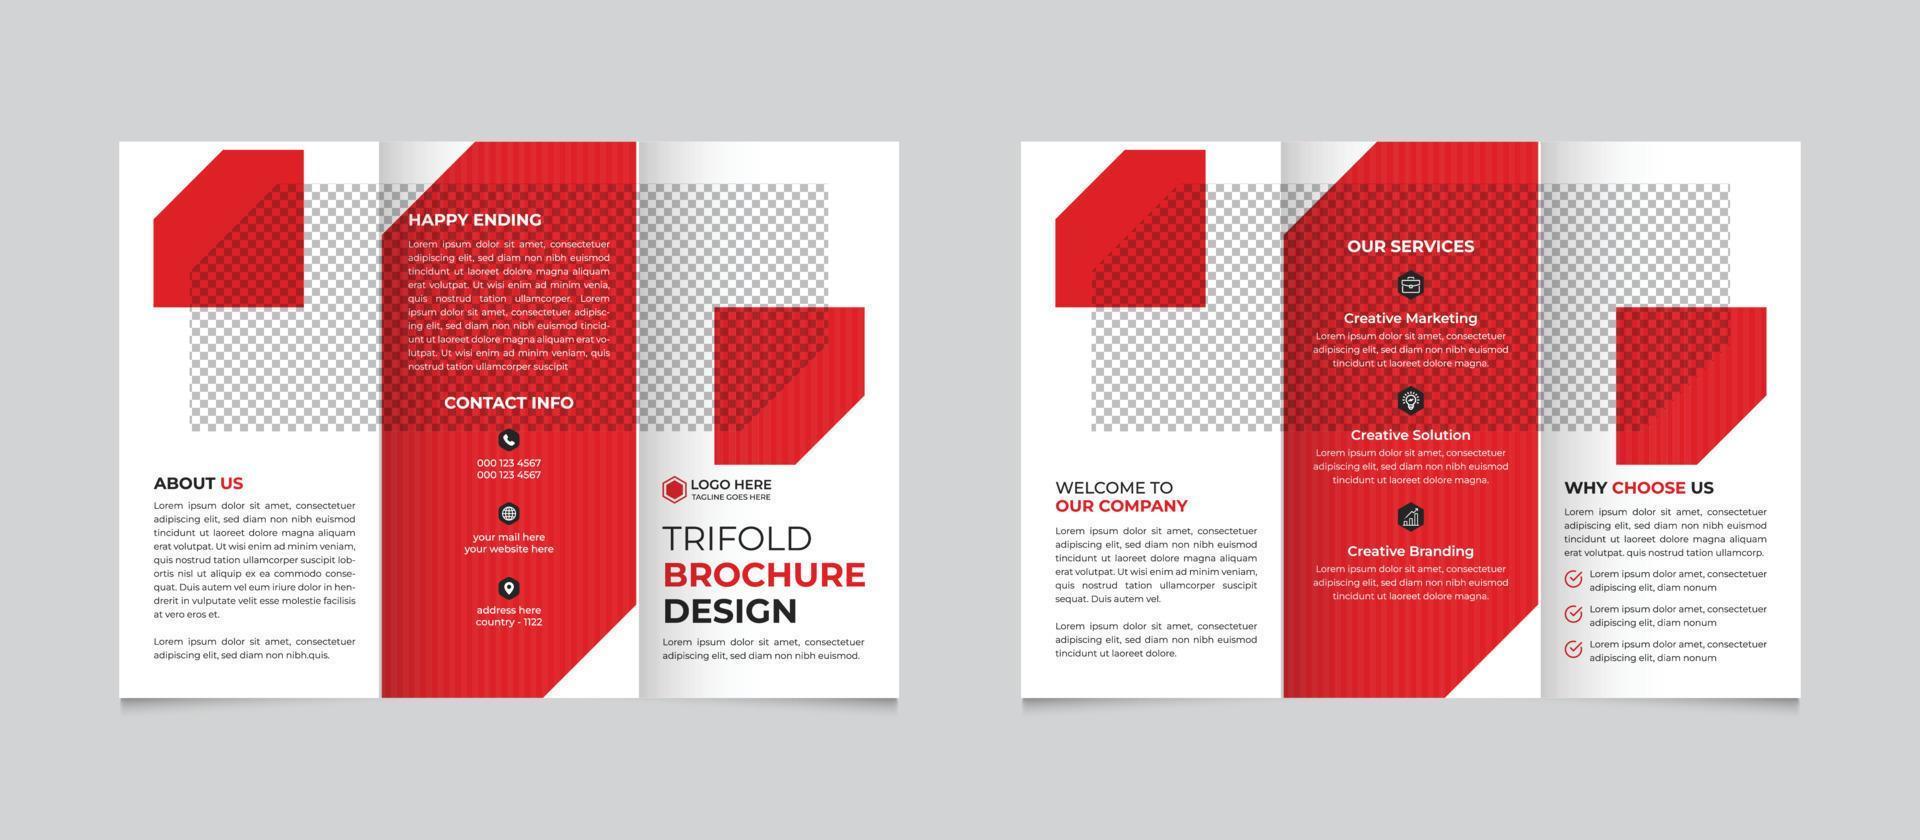 Creative Modern Corporate Trifold Brochure Template Design Free Vector